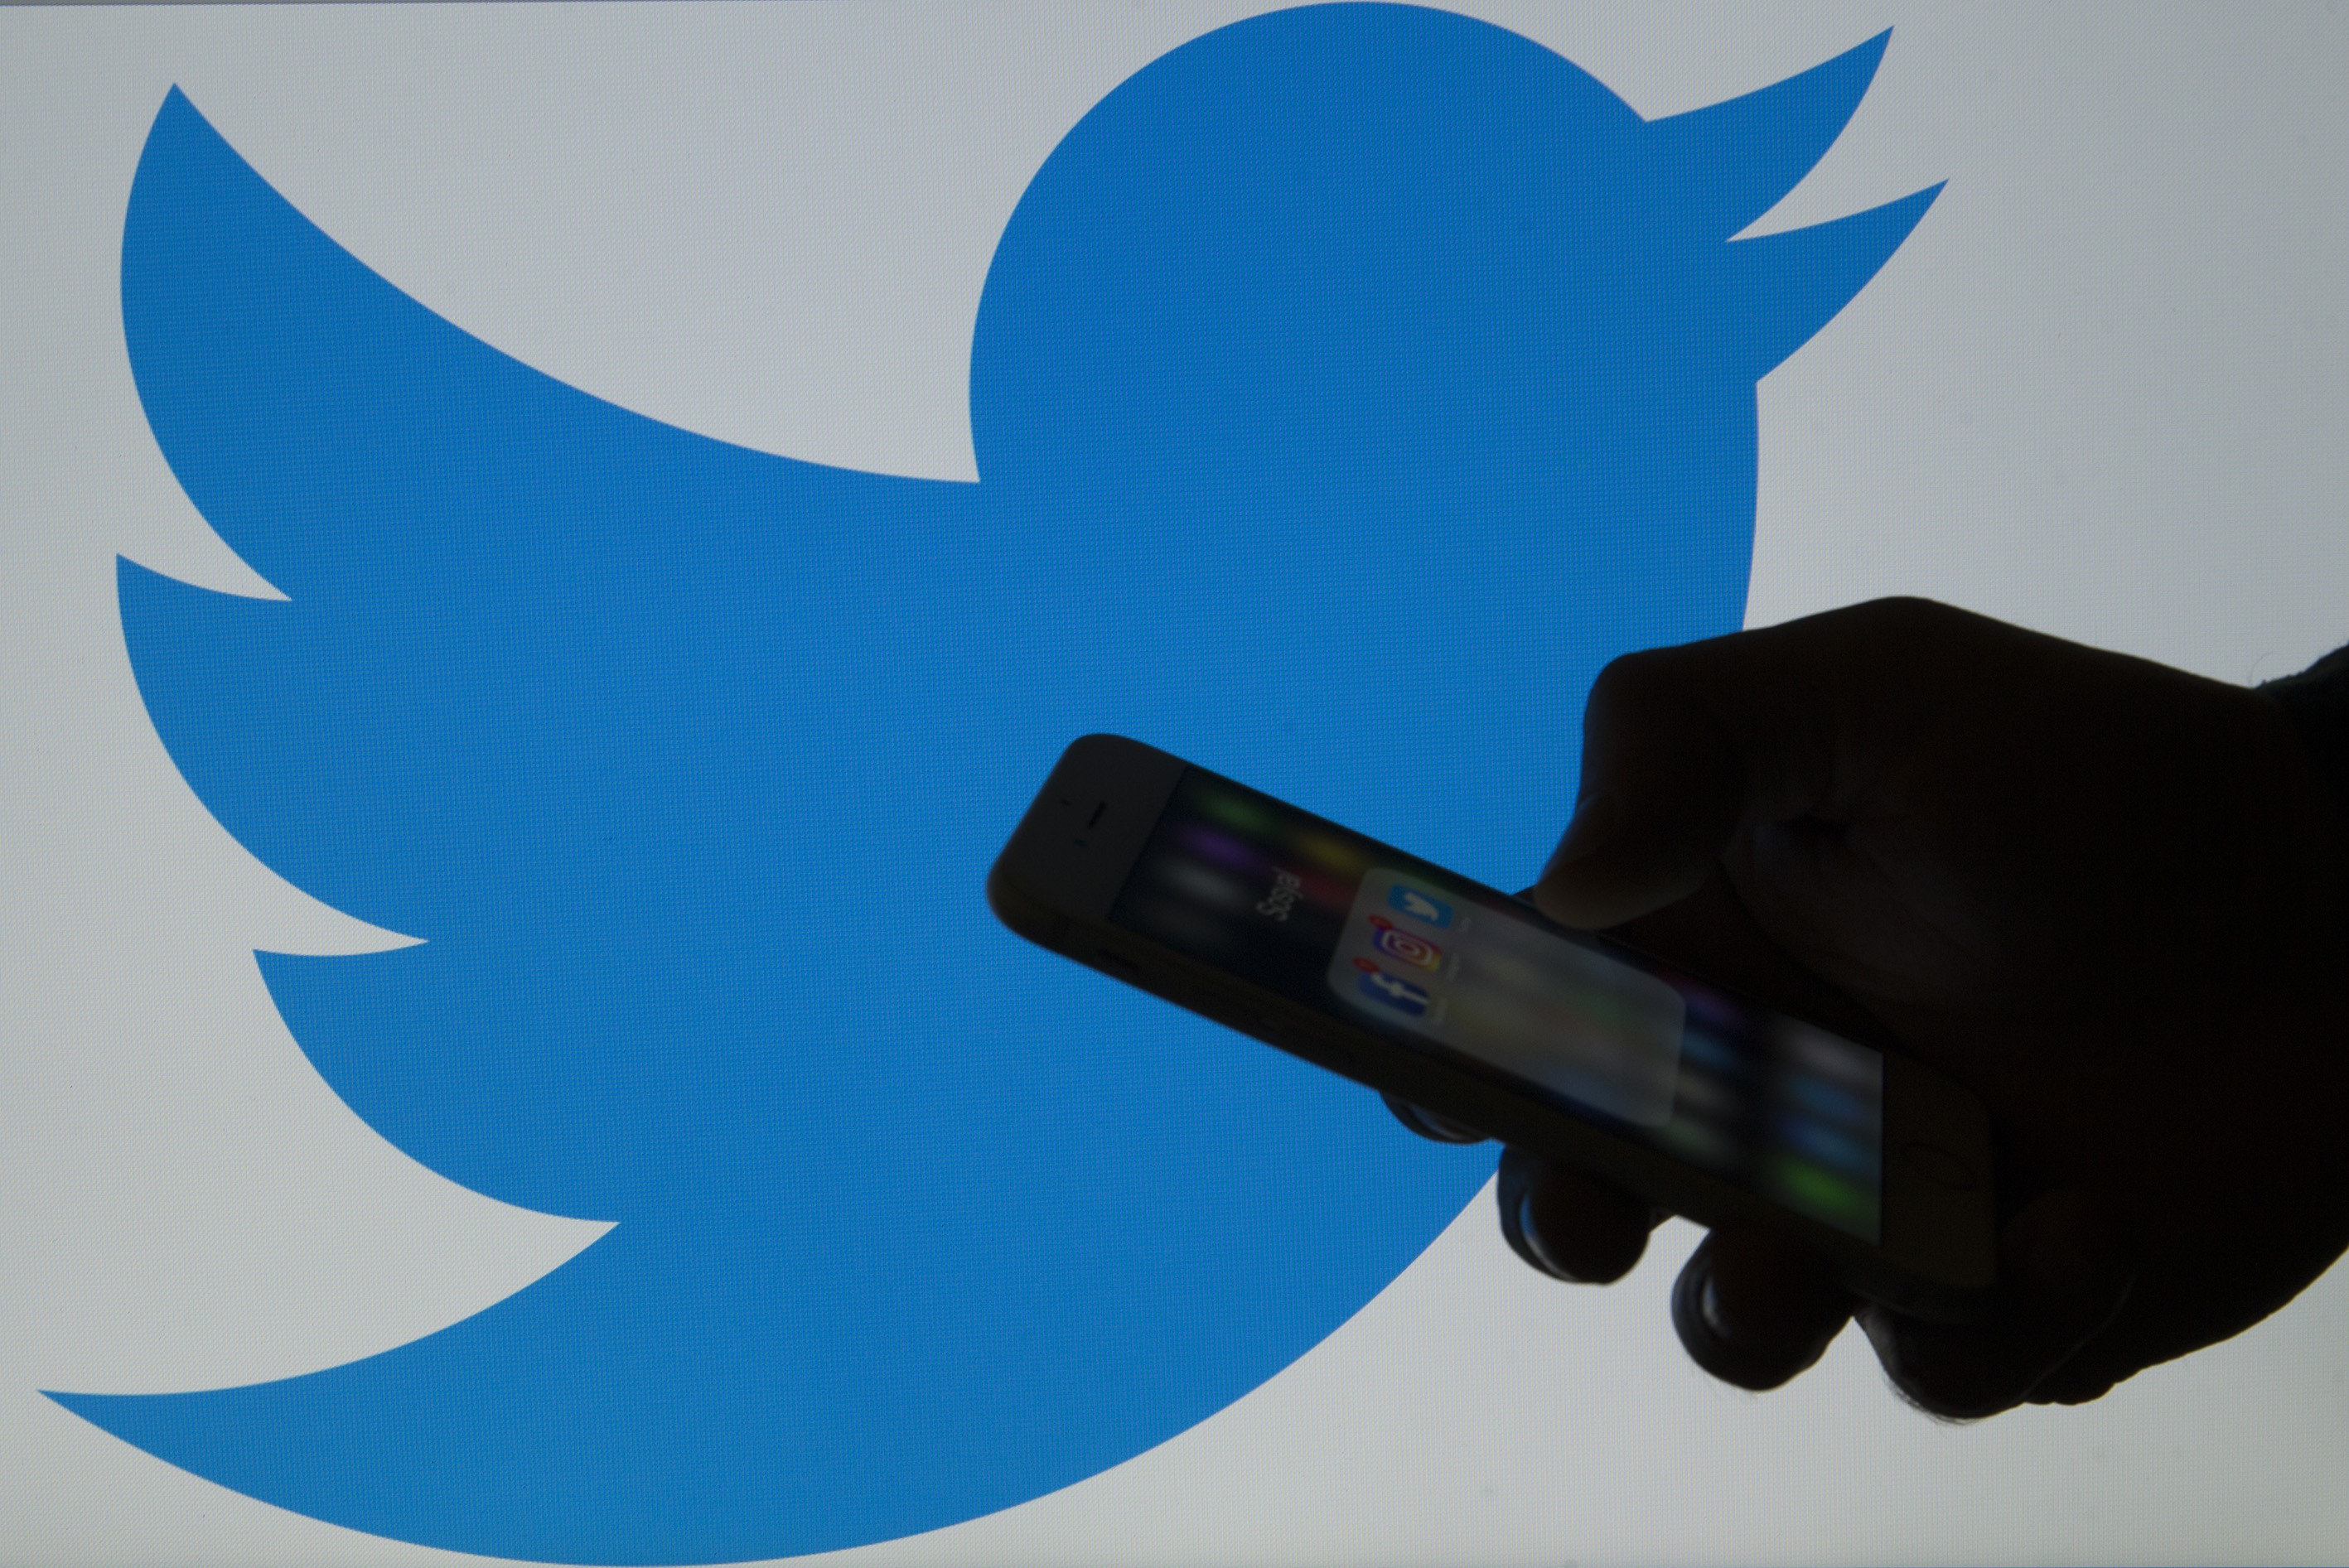 Twitter agrega función para reportar “fake news” durante procesos electorales